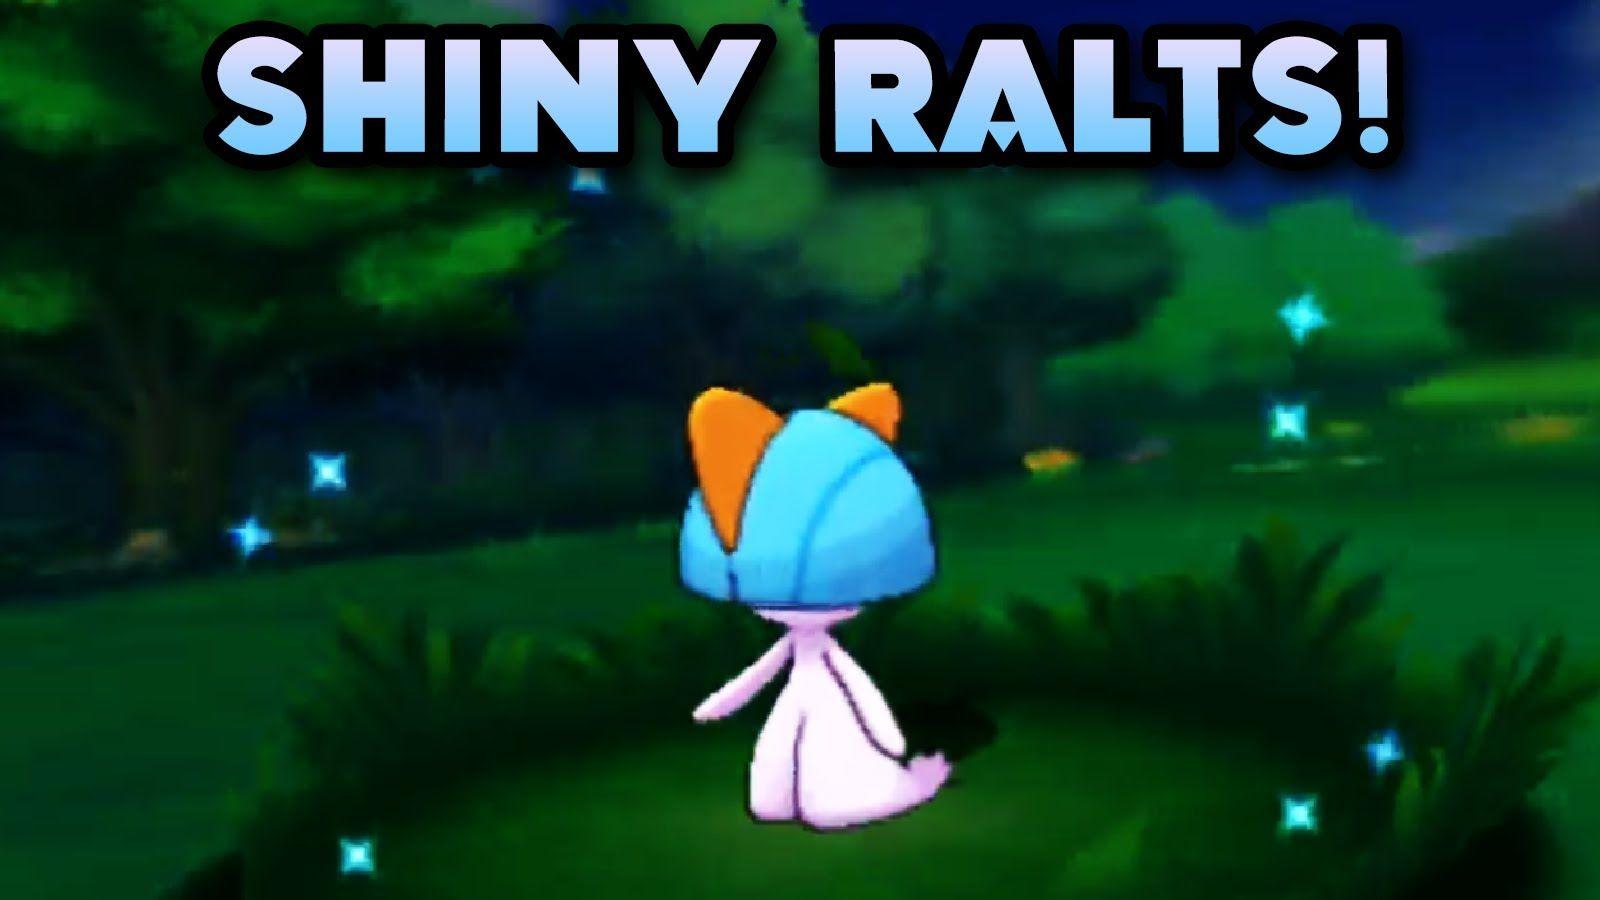 Shiny ralts after 4 encounters!! pokemon omega ruby!